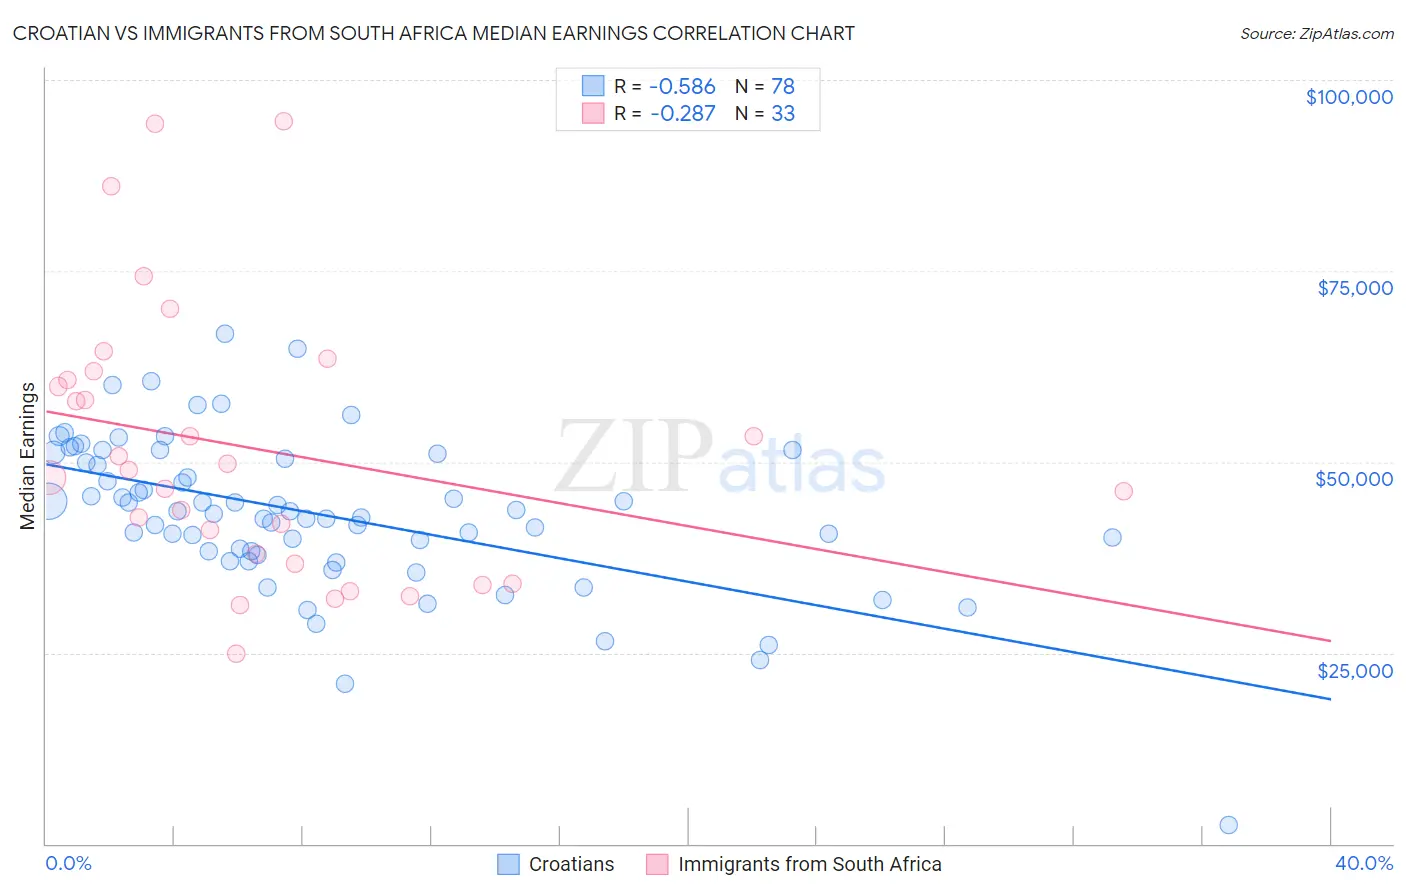 Croatian vs Immigrants from South Africa Median Earnings